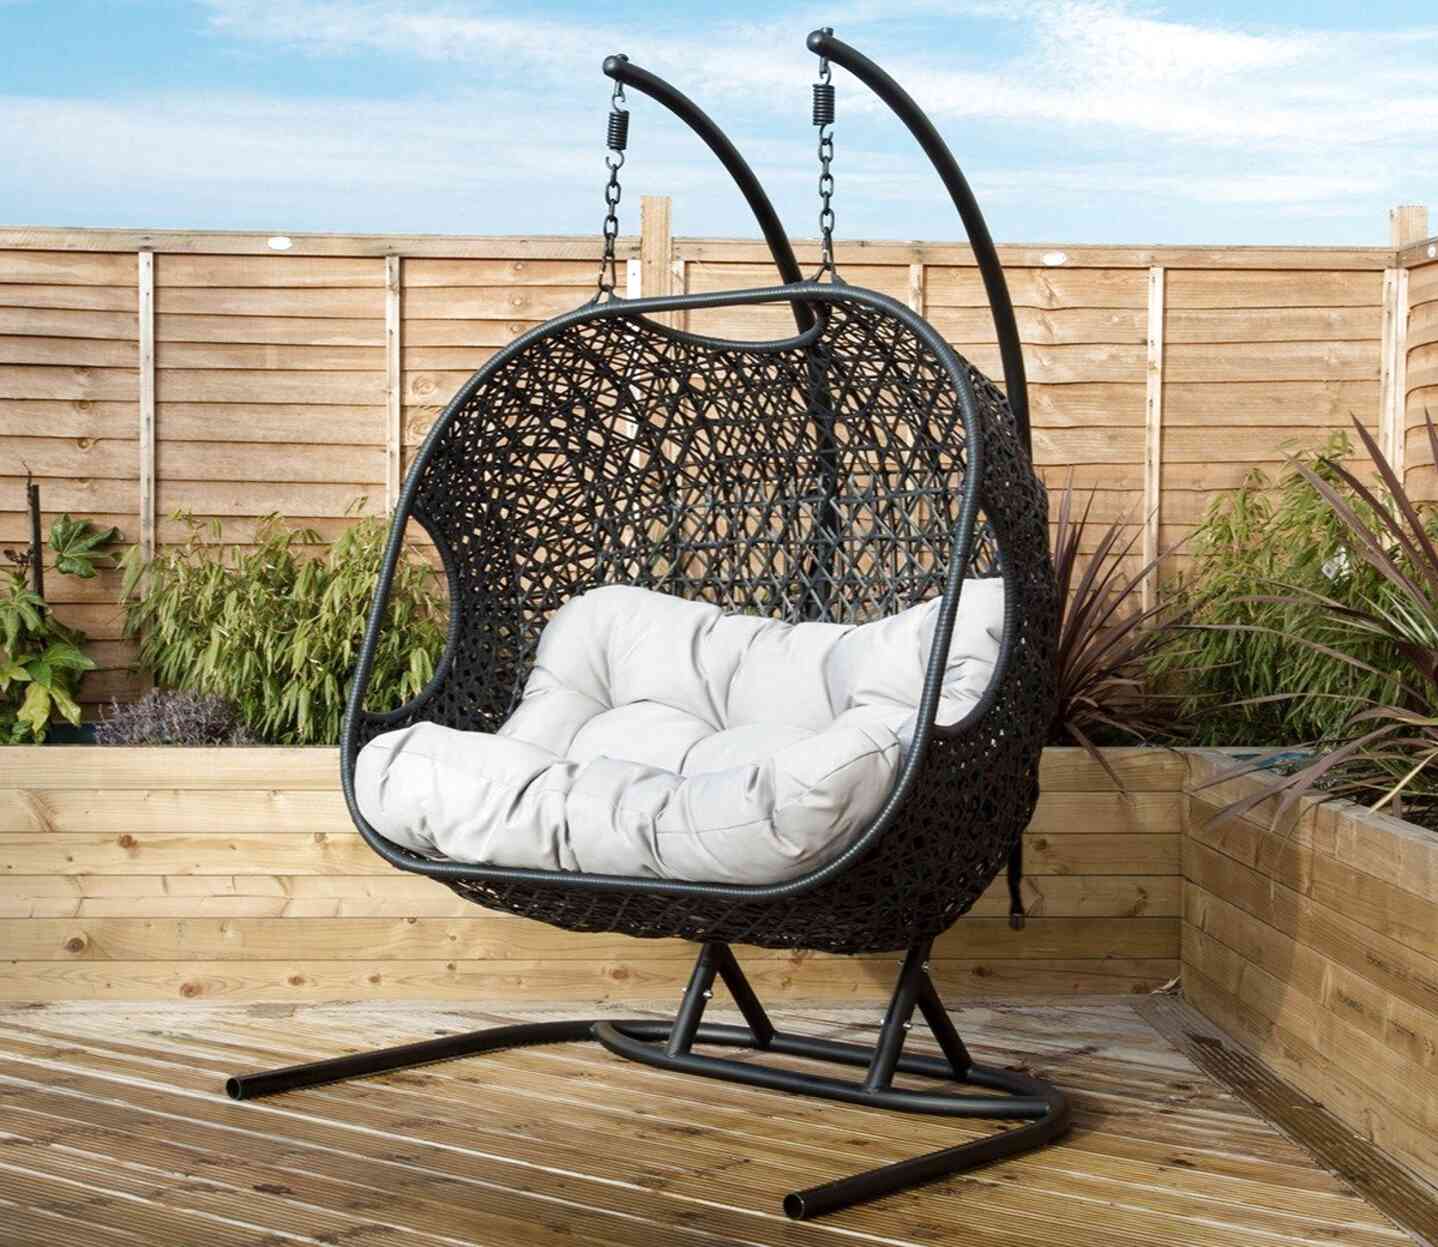 Garden Swing Chair for sale in UK | 89 used Garden Swing Chairs